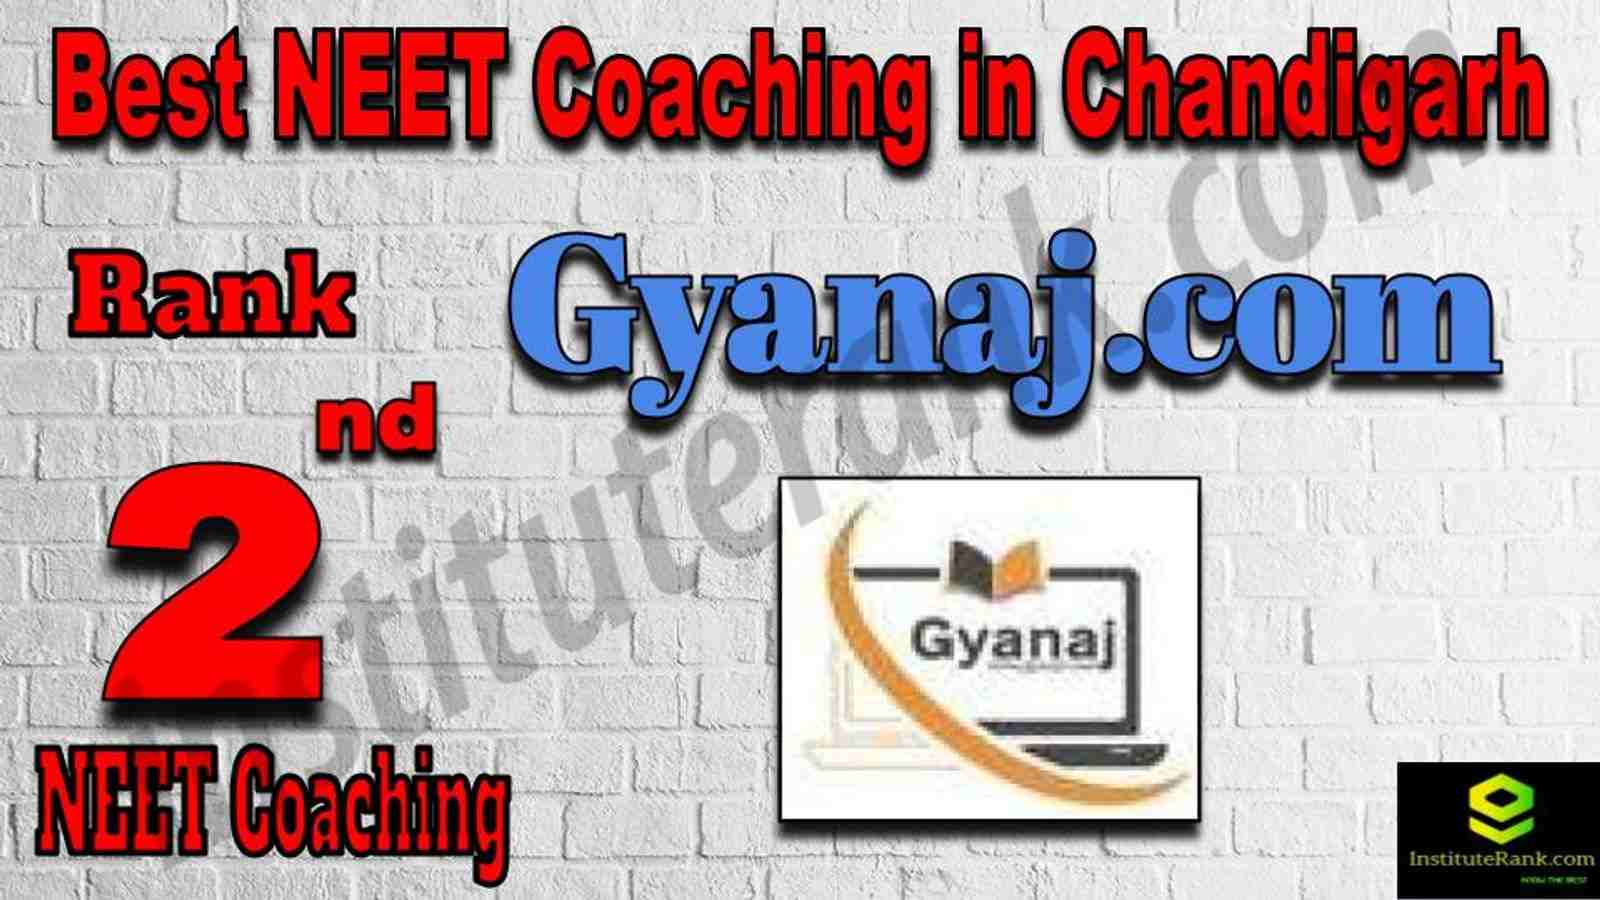 2nd Best NEET Coaching in Chandigarh